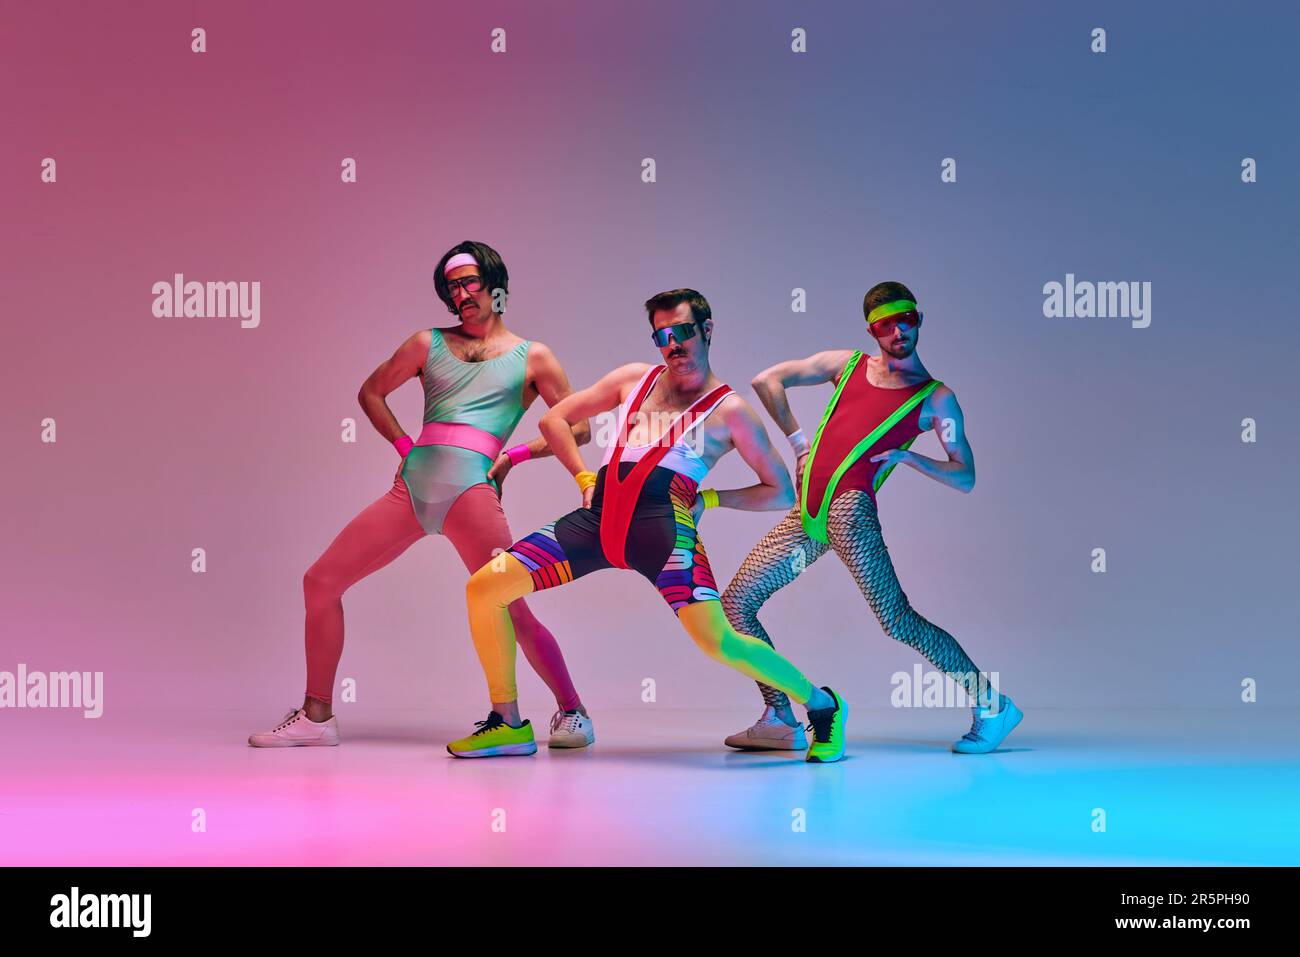 https://c8.alamy.com/comp/2R5PH90/funny-men-in-vintage-colorful-sportswear-posing-doing-aerobics-exercises-against-gradient-blue-pink-studio-background-in-neon-light-2R5PH90.jpg